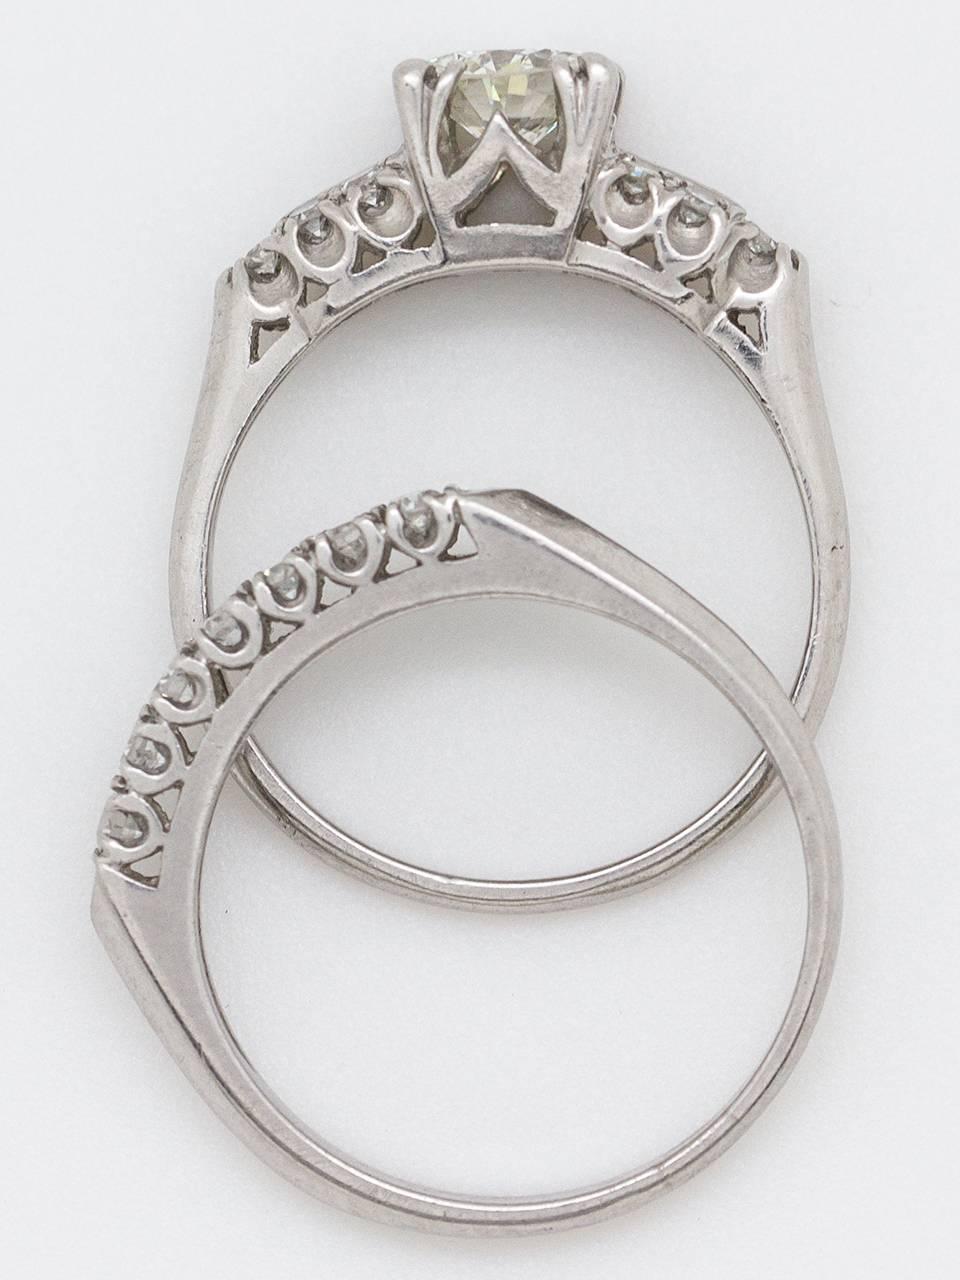 1940s wedding ring sets